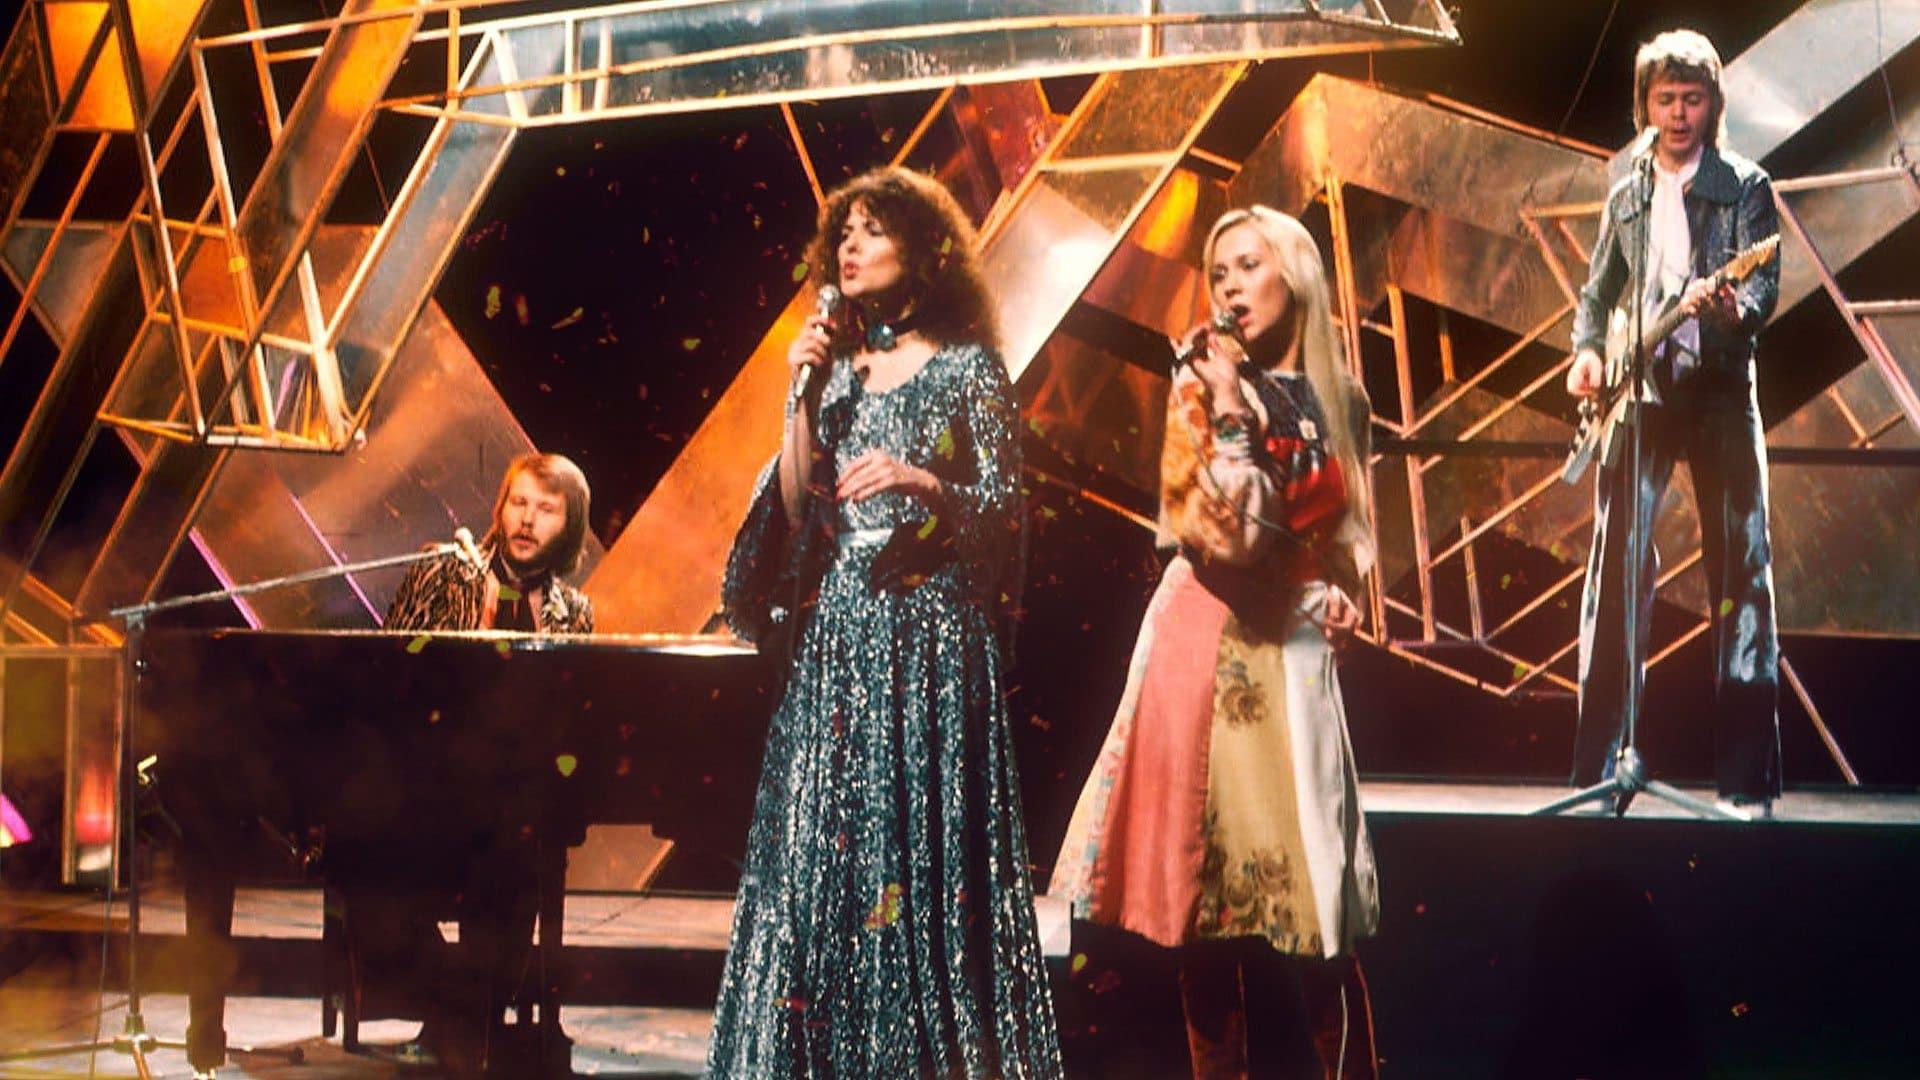 ABBA at the BBC backdrop